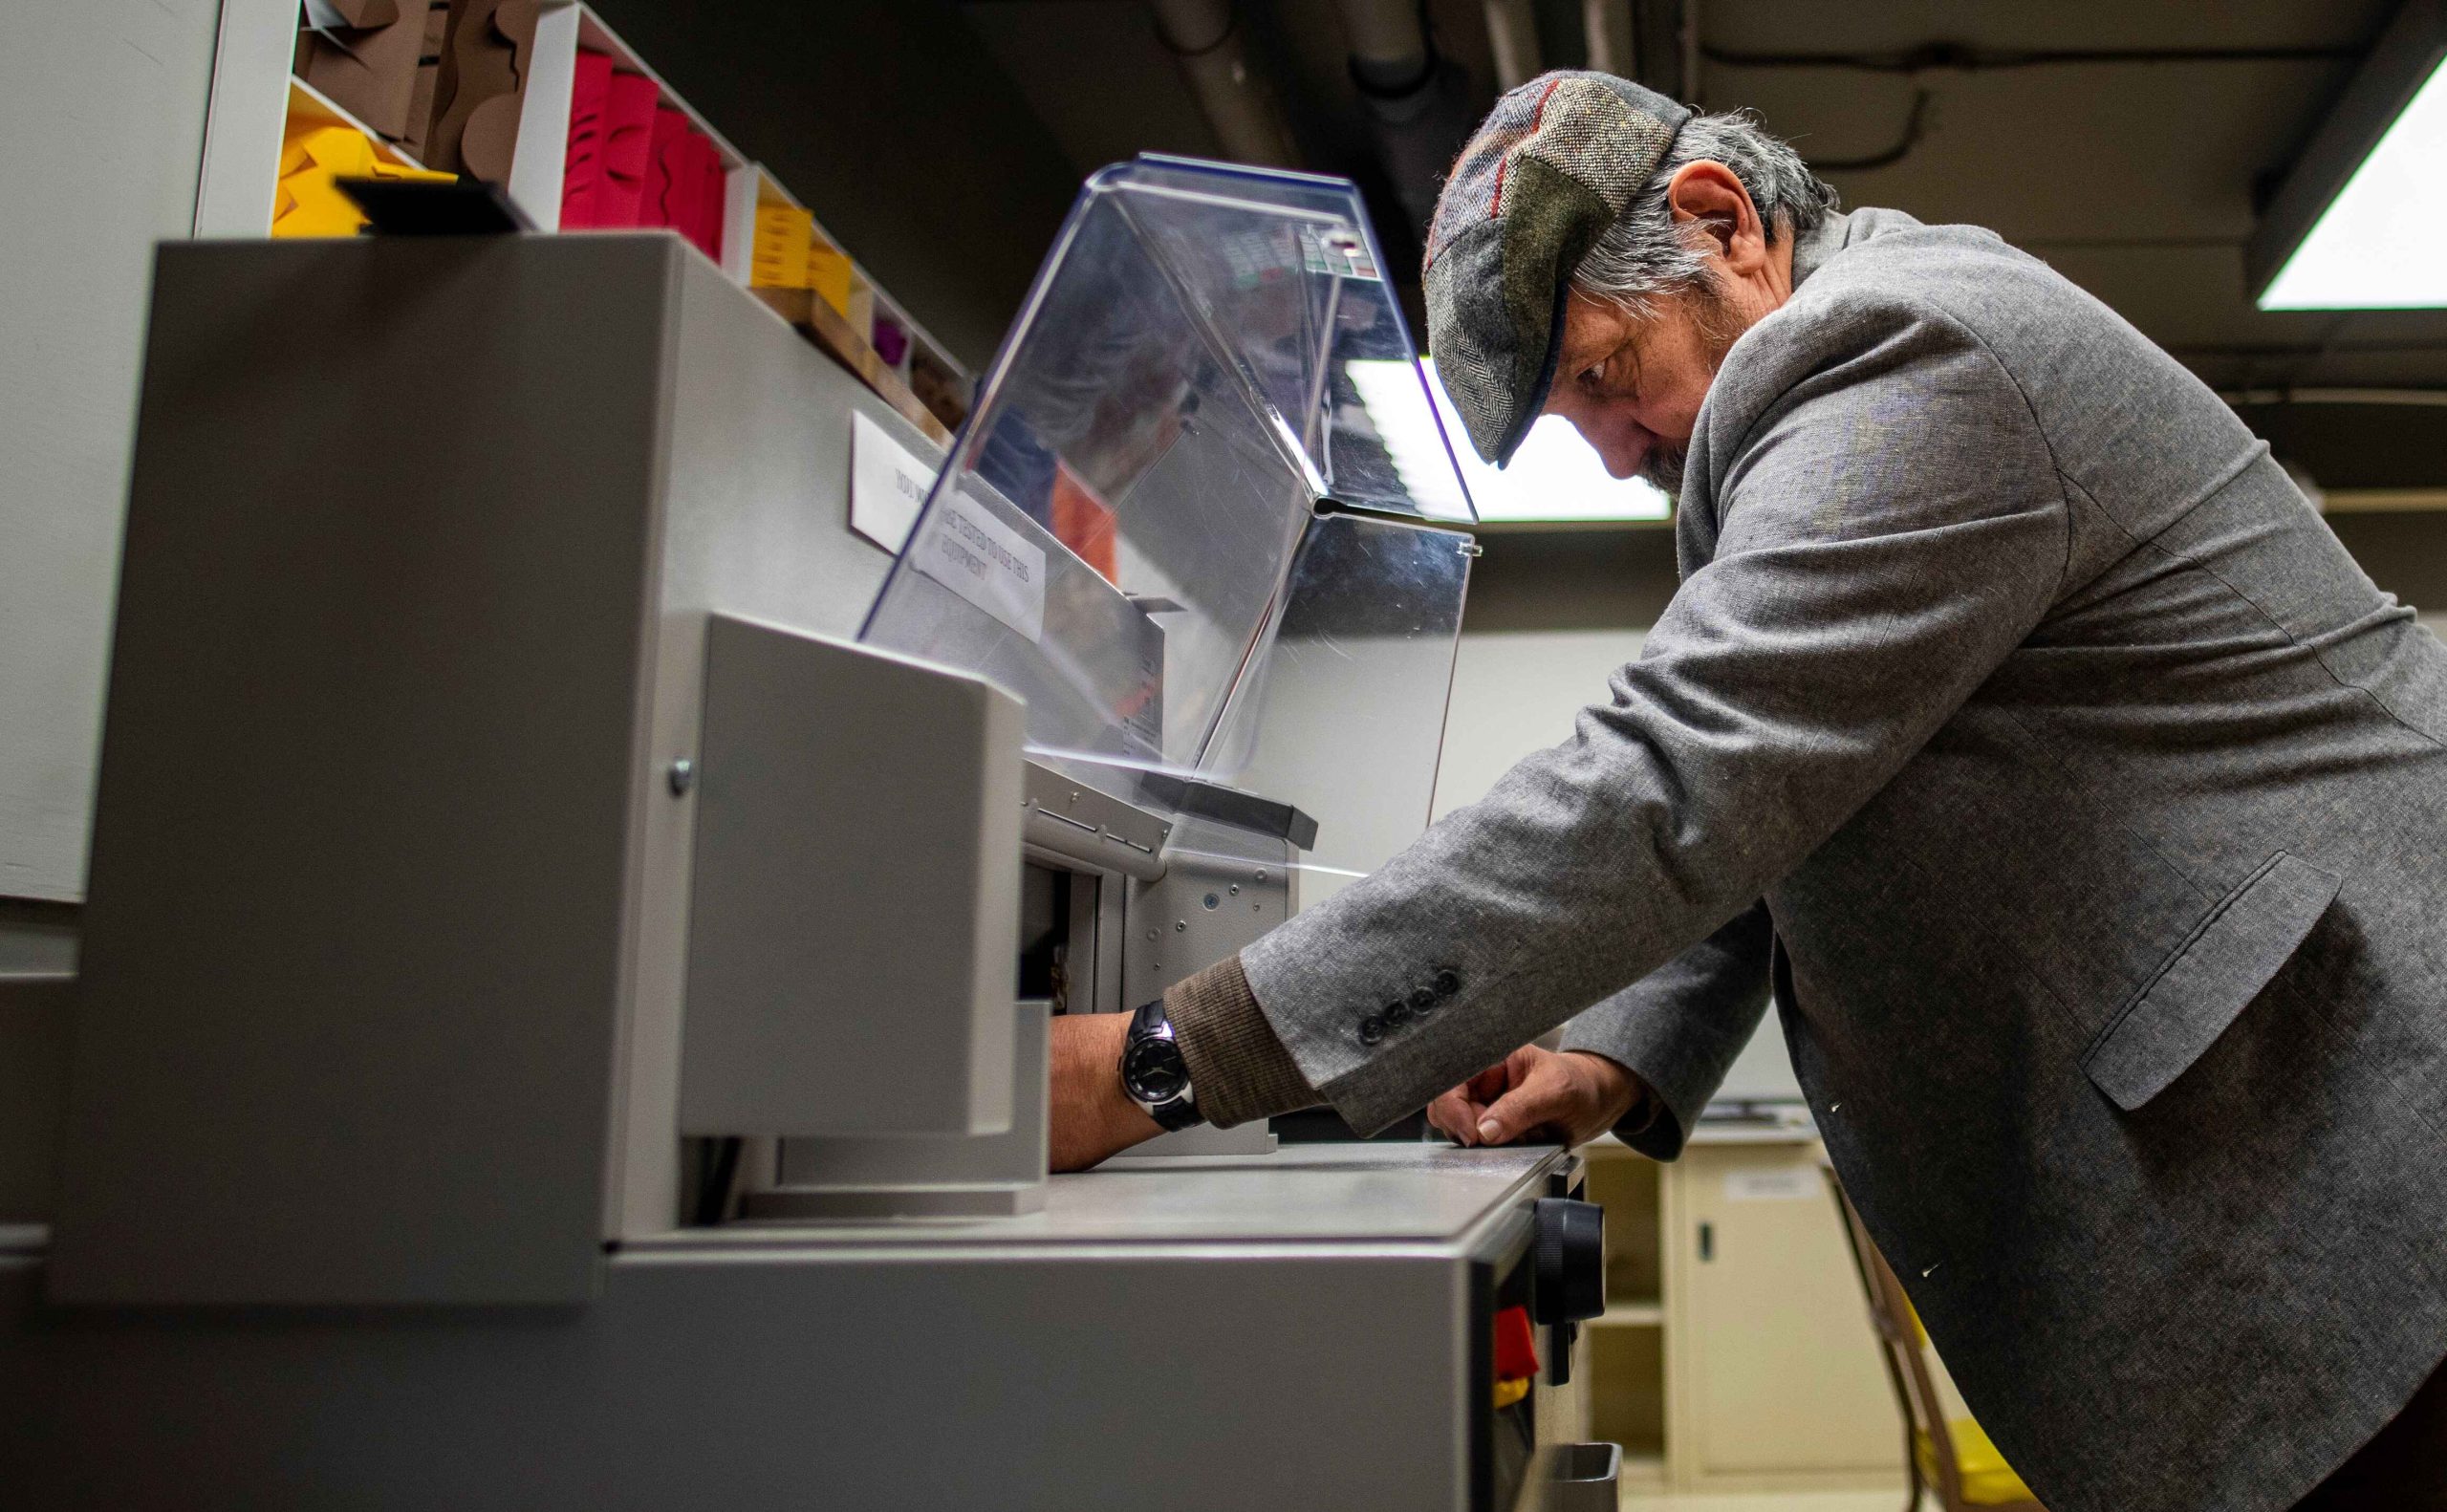 Bernie Vinzani, wearing a grey coat and cap, works with a machine in the book arts studio